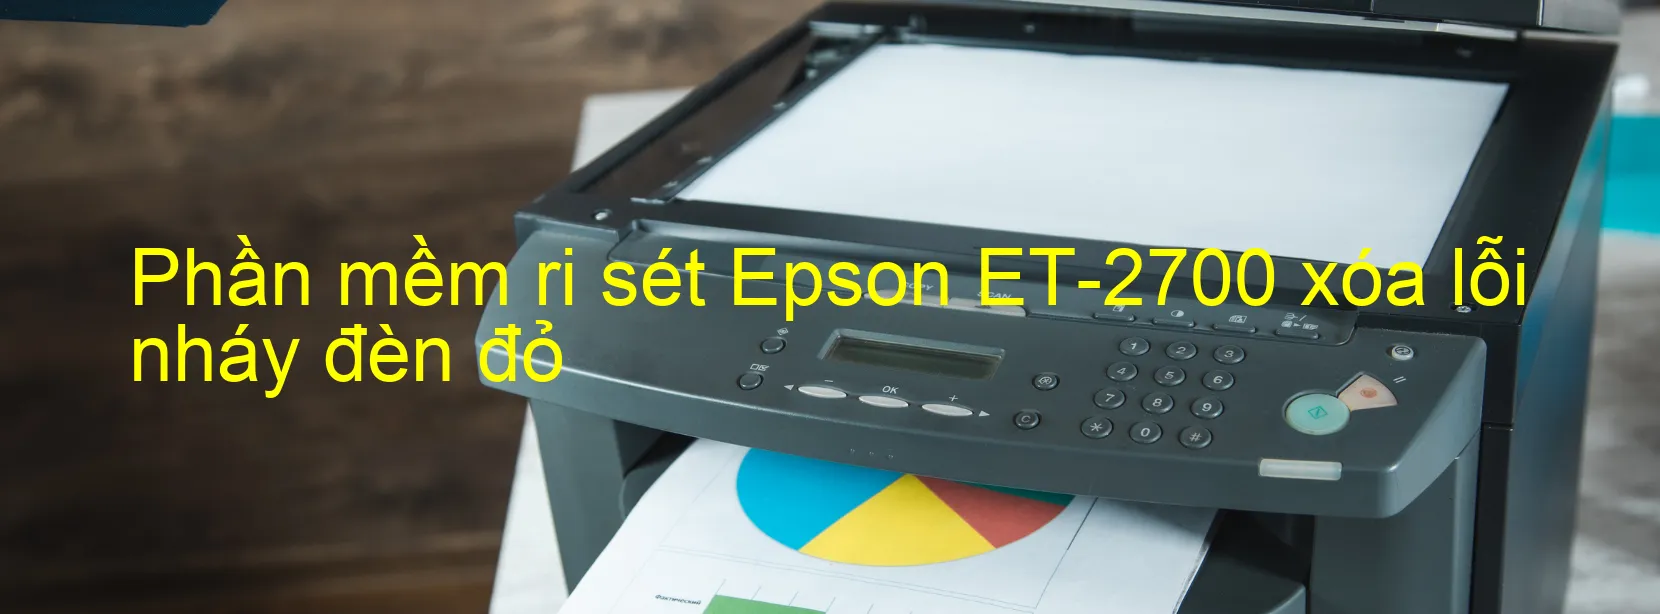 Phần mềm reset Epson ET-2700 xóa lỗi nháy đèn đỏ